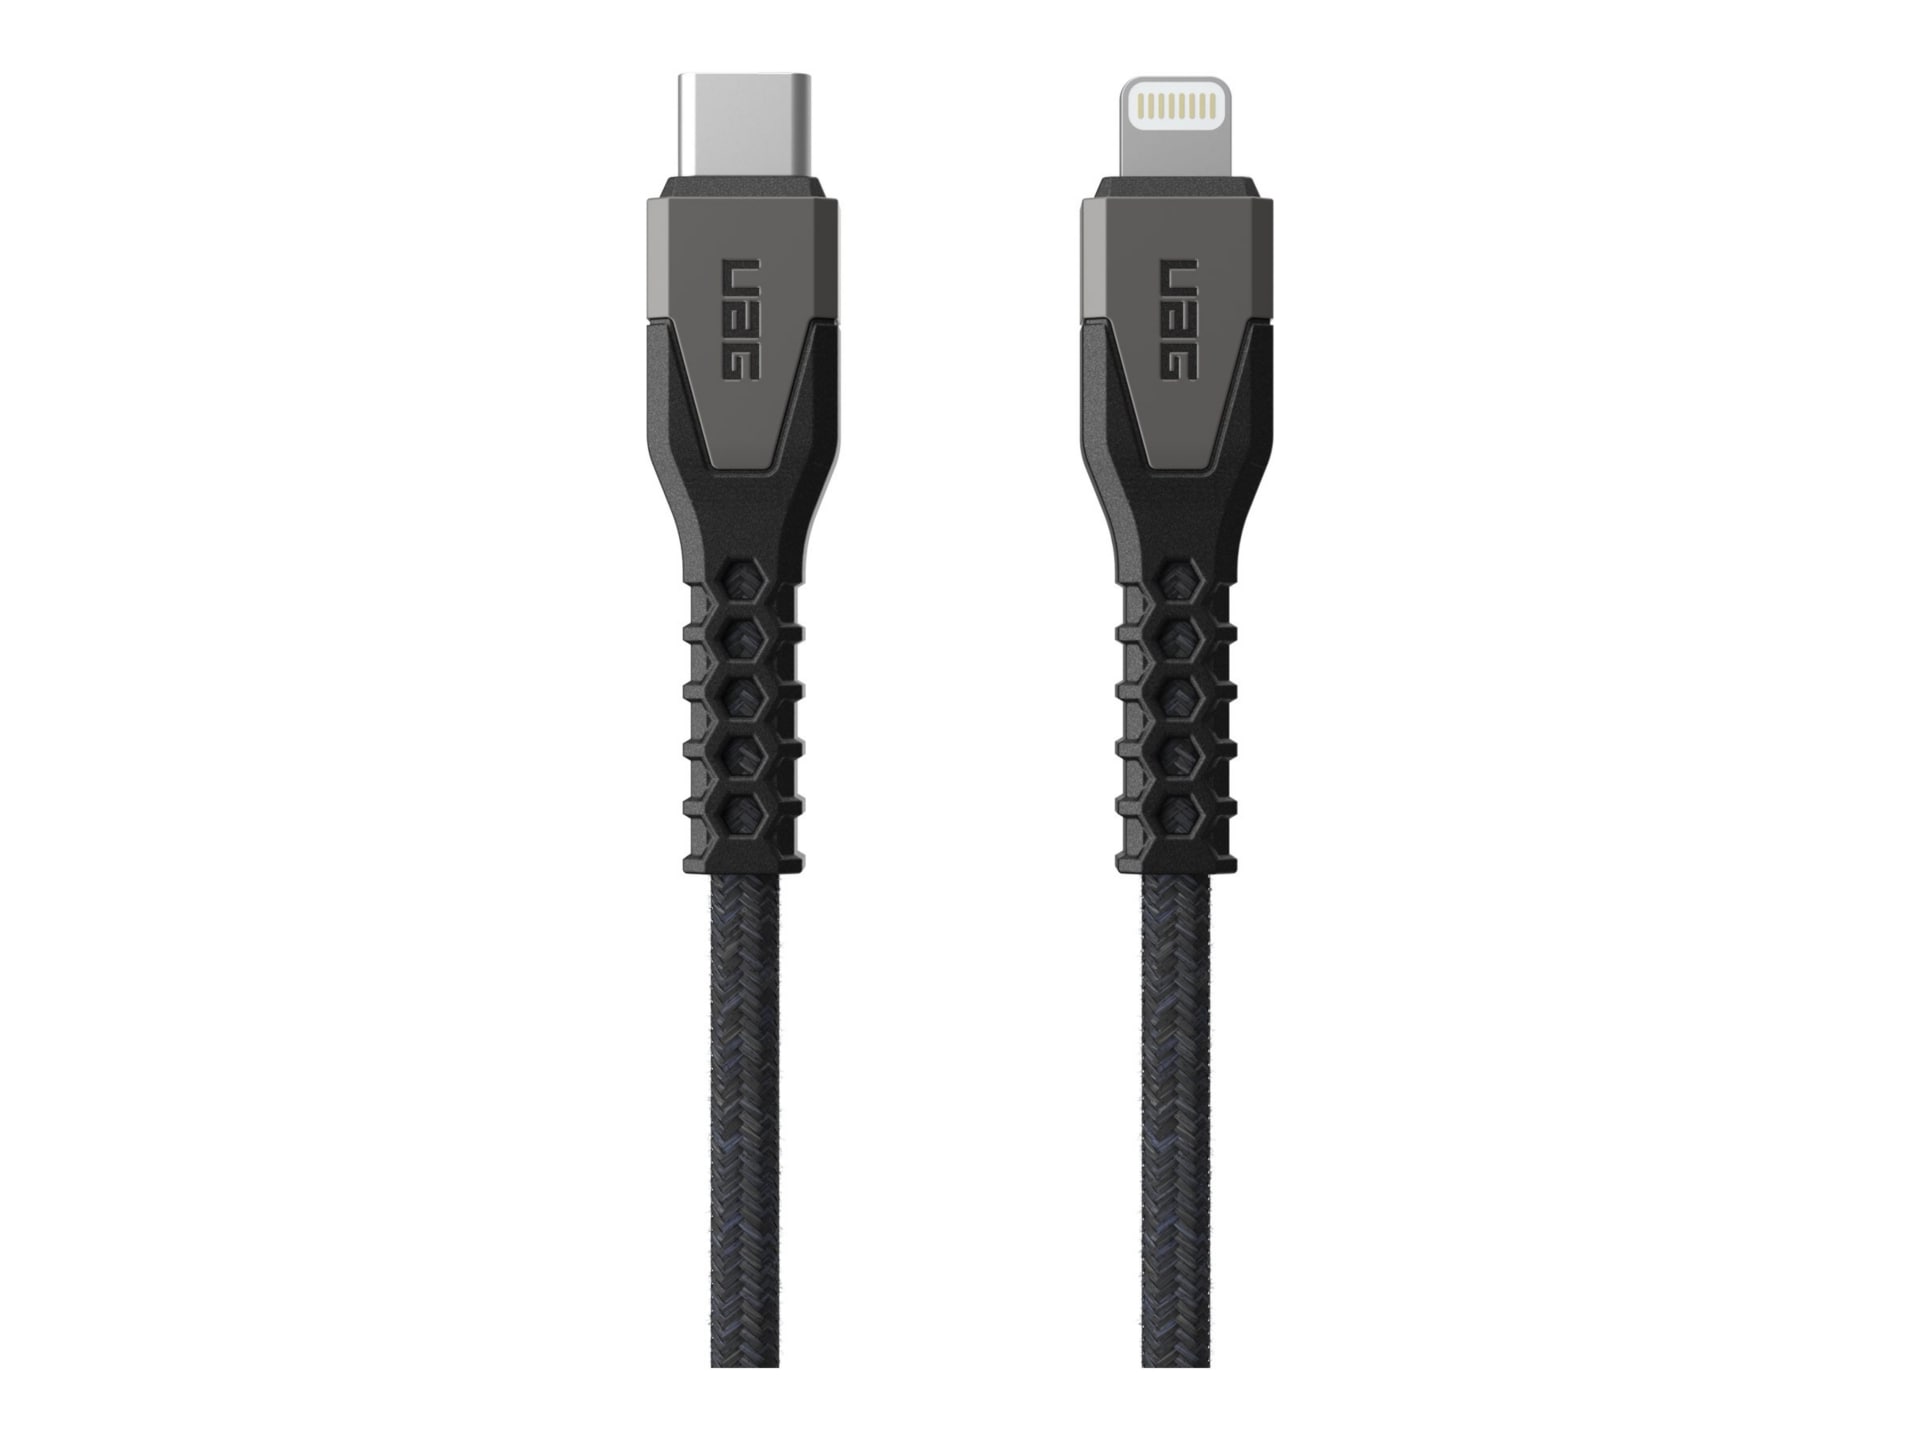 UAG Rugged Charging Cable USB-C to Lightning 5ft- Black/Gray - Lightning ca